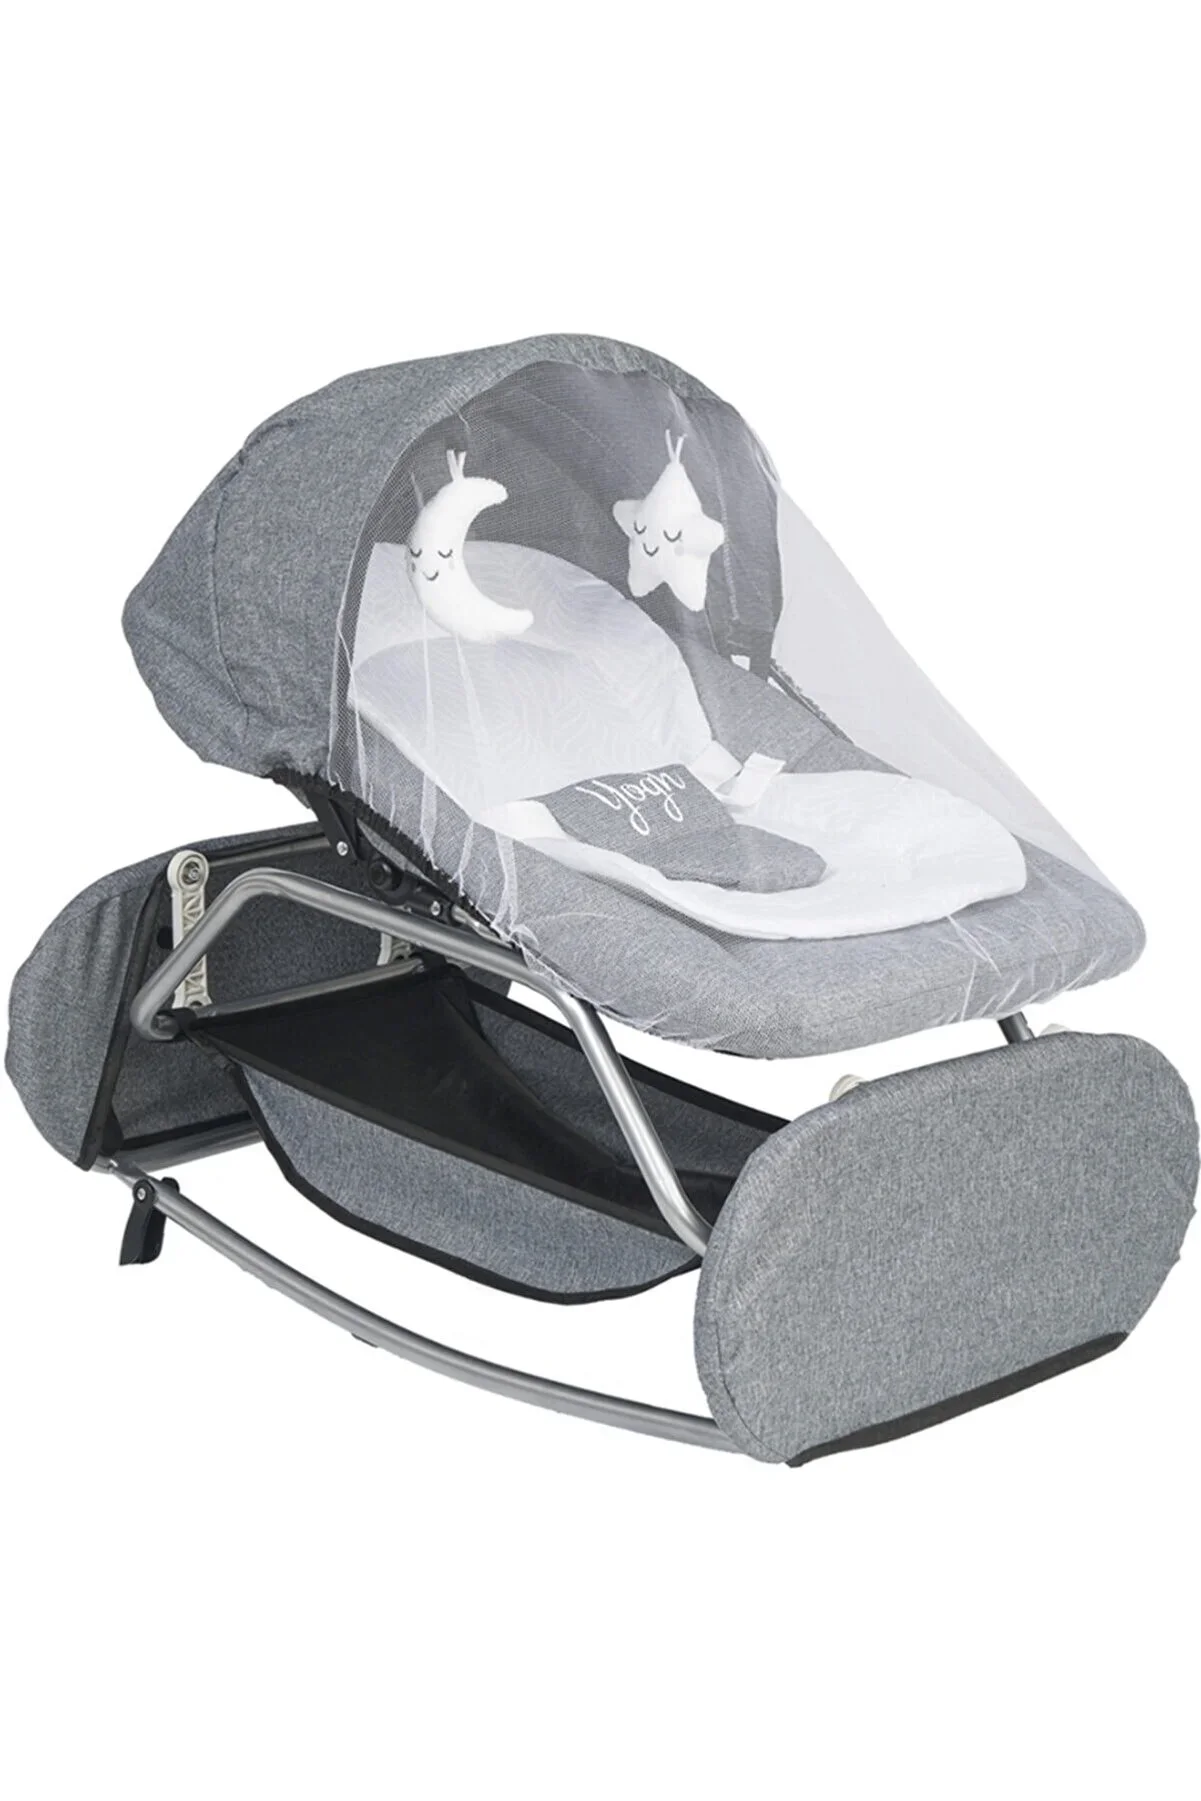 Lux Natural Baby Sleeping Bed Baby Cradle Rocking Chair Swing Soothing Crib Newborn Nursery, Mother Lap Baby, baby Crib Sleep